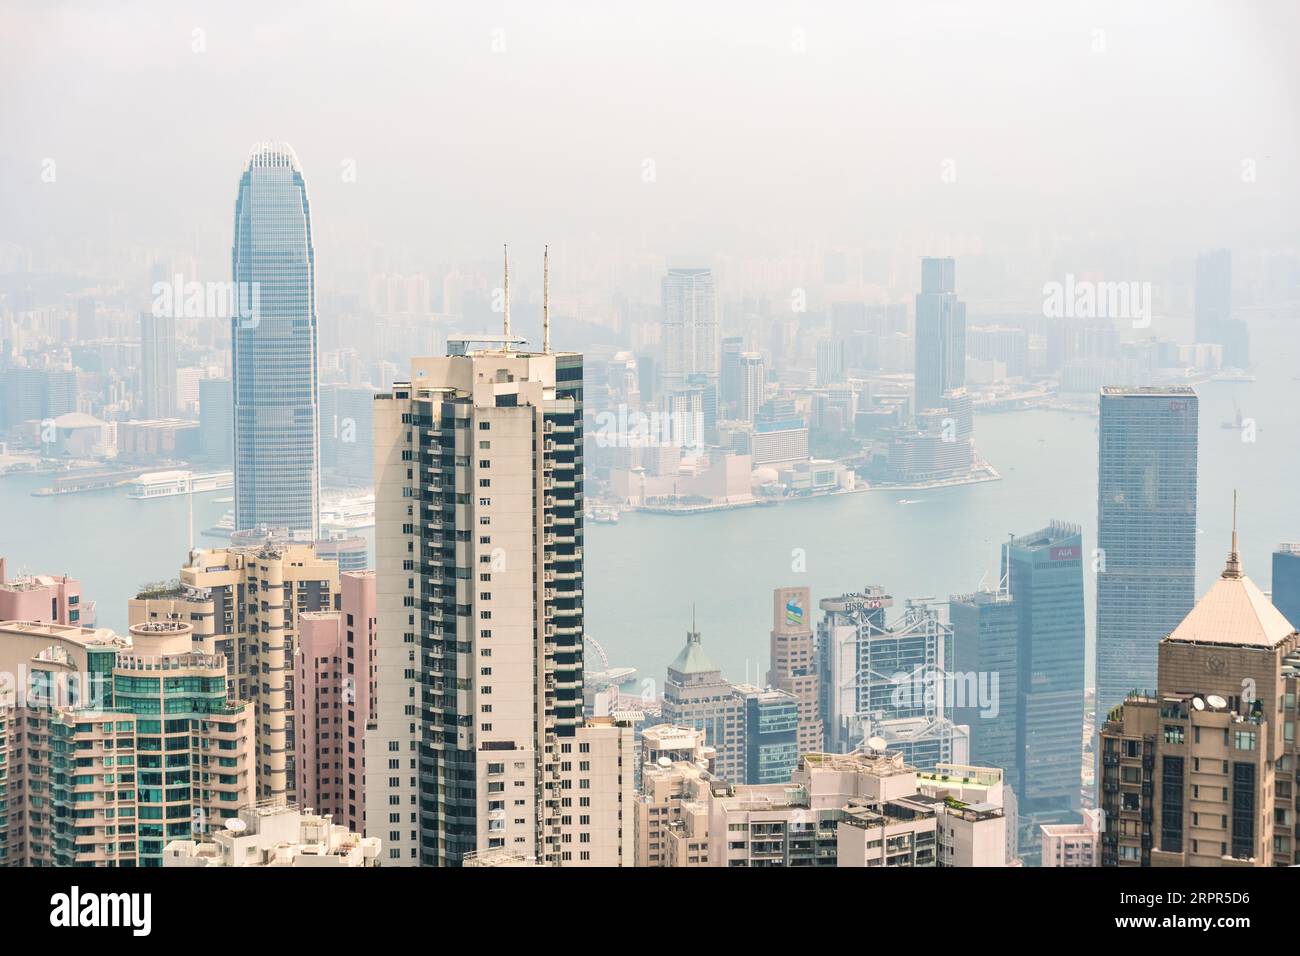 Hong Kong,March 26,2019:Panorama of skyscrapers, victoria harbor and hong kong bay taken from victoria peak park on hong kong island during a hazy day Stock Photo